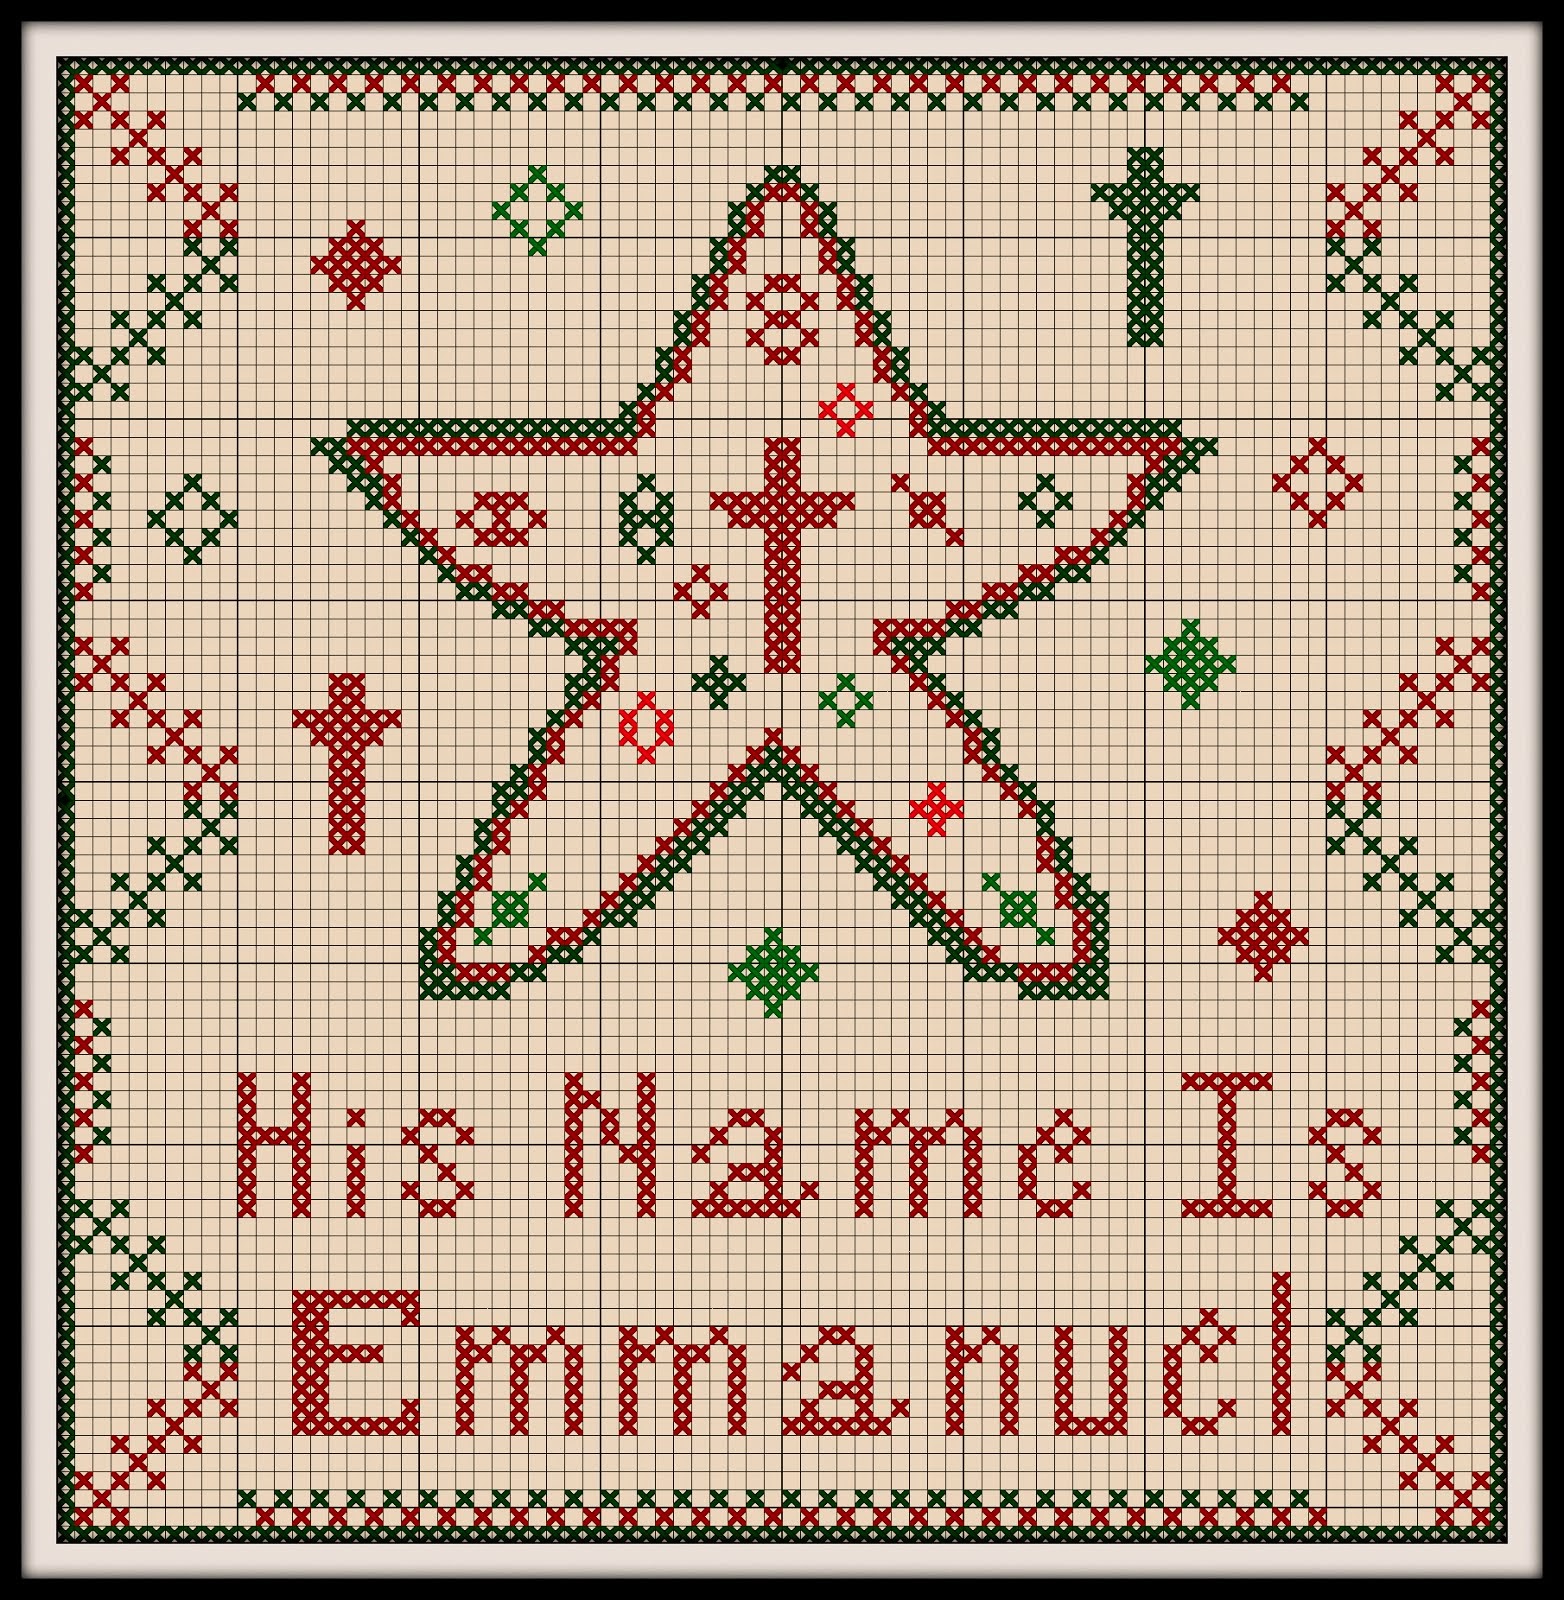 His Name is Emmanuel